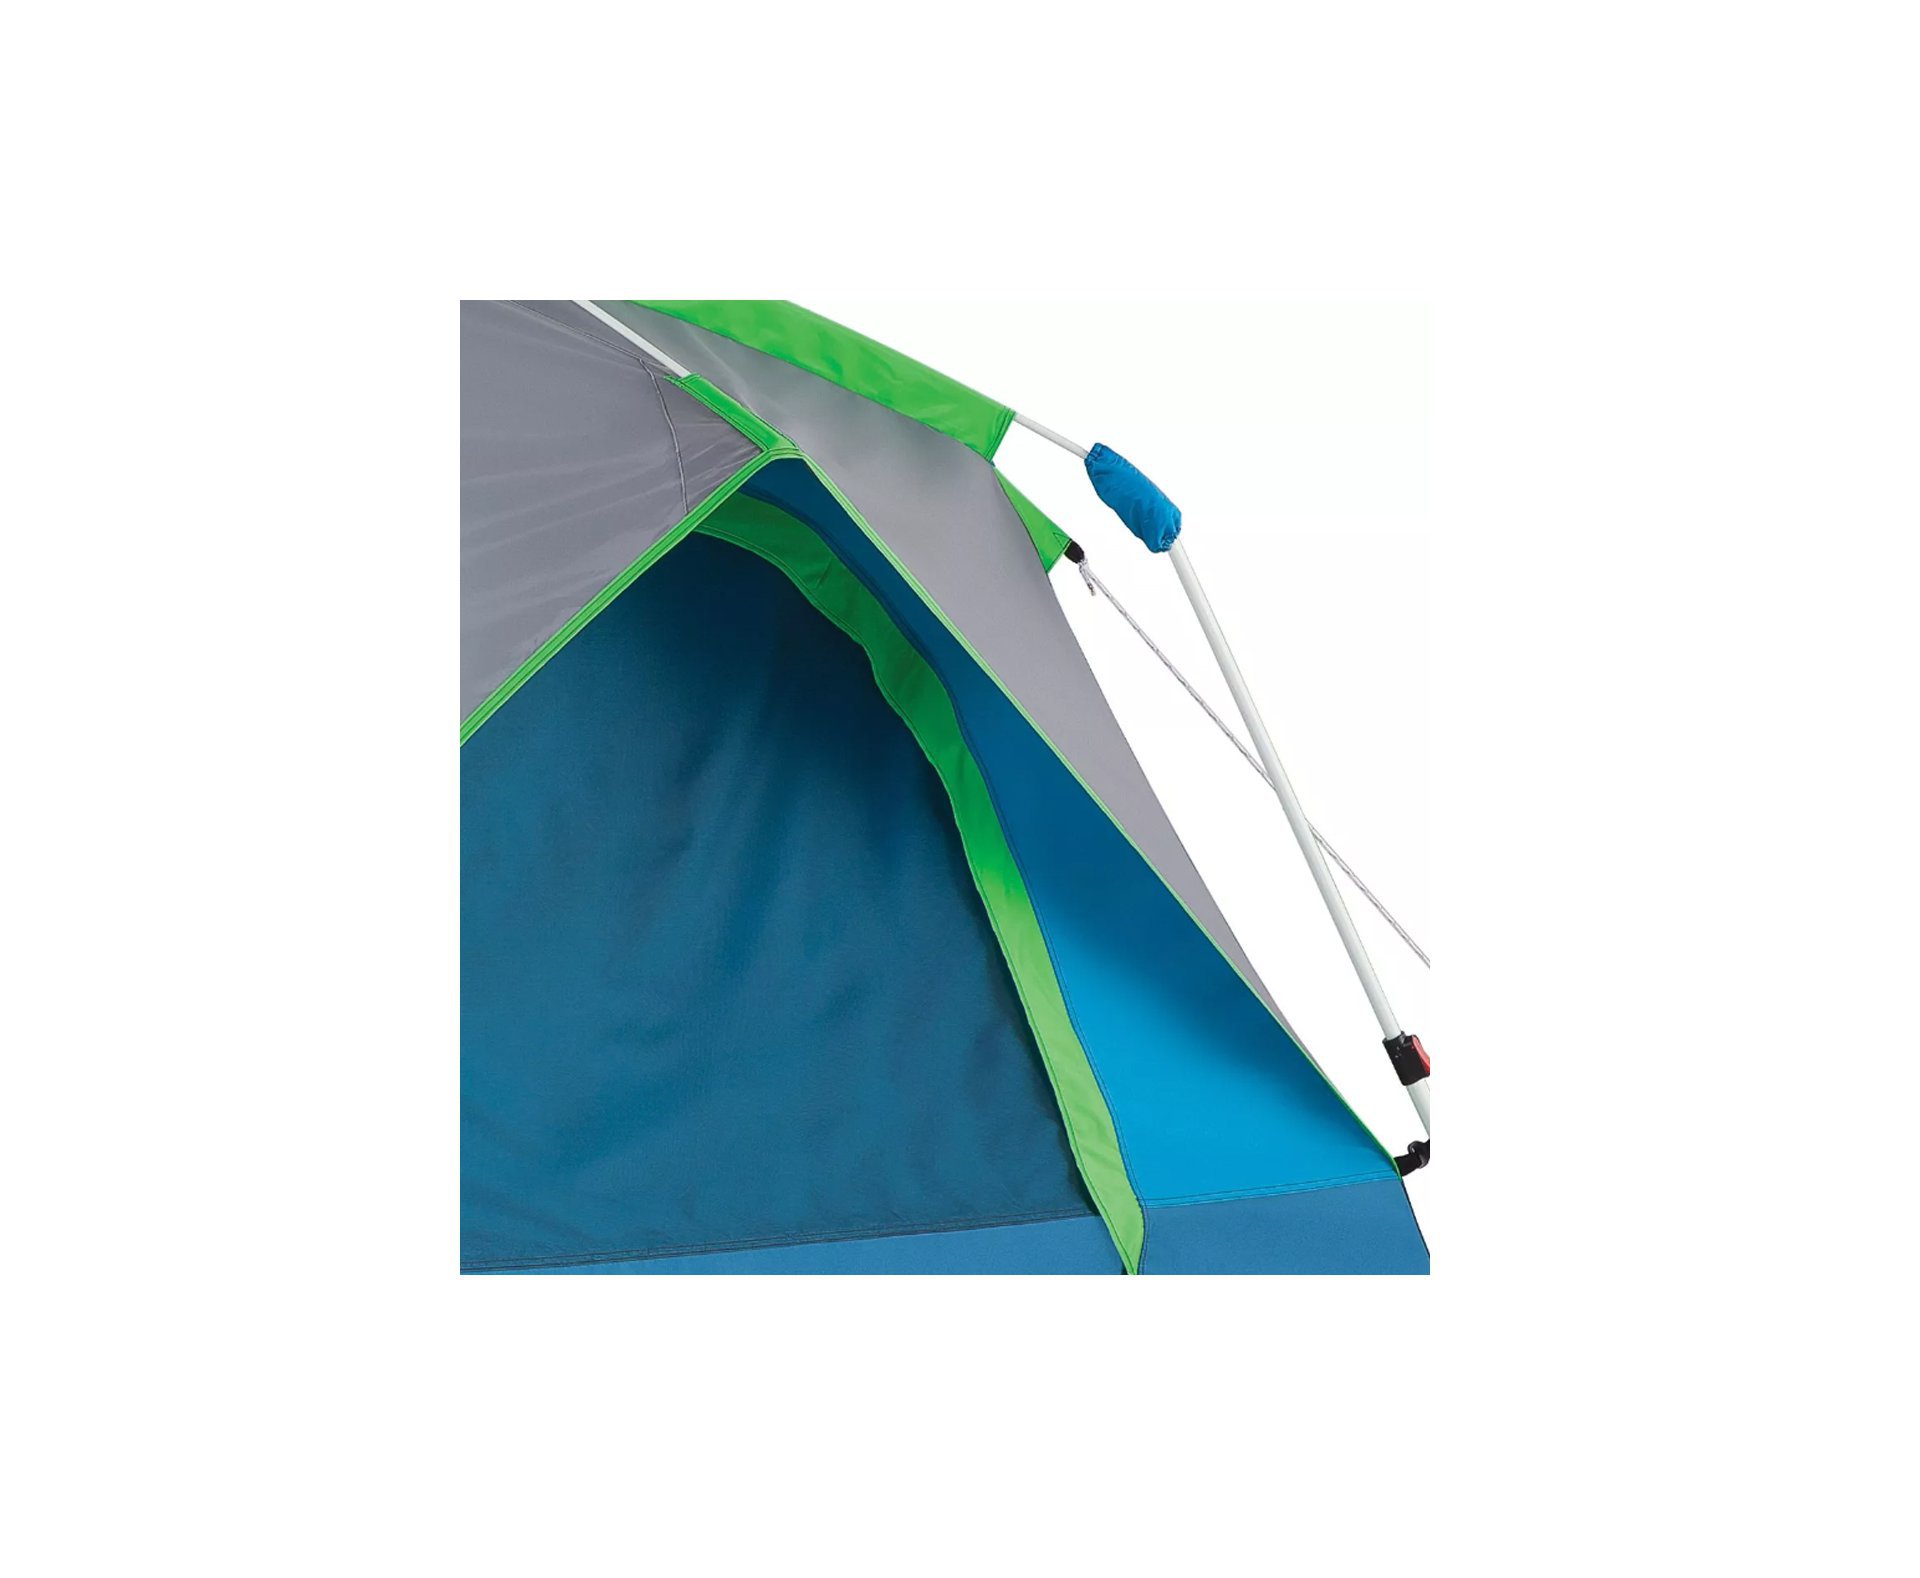 Barraca Signal Mountain Instant Tent Cabin 6 Pessoas 2000mm Coluna Dágua - Coleman